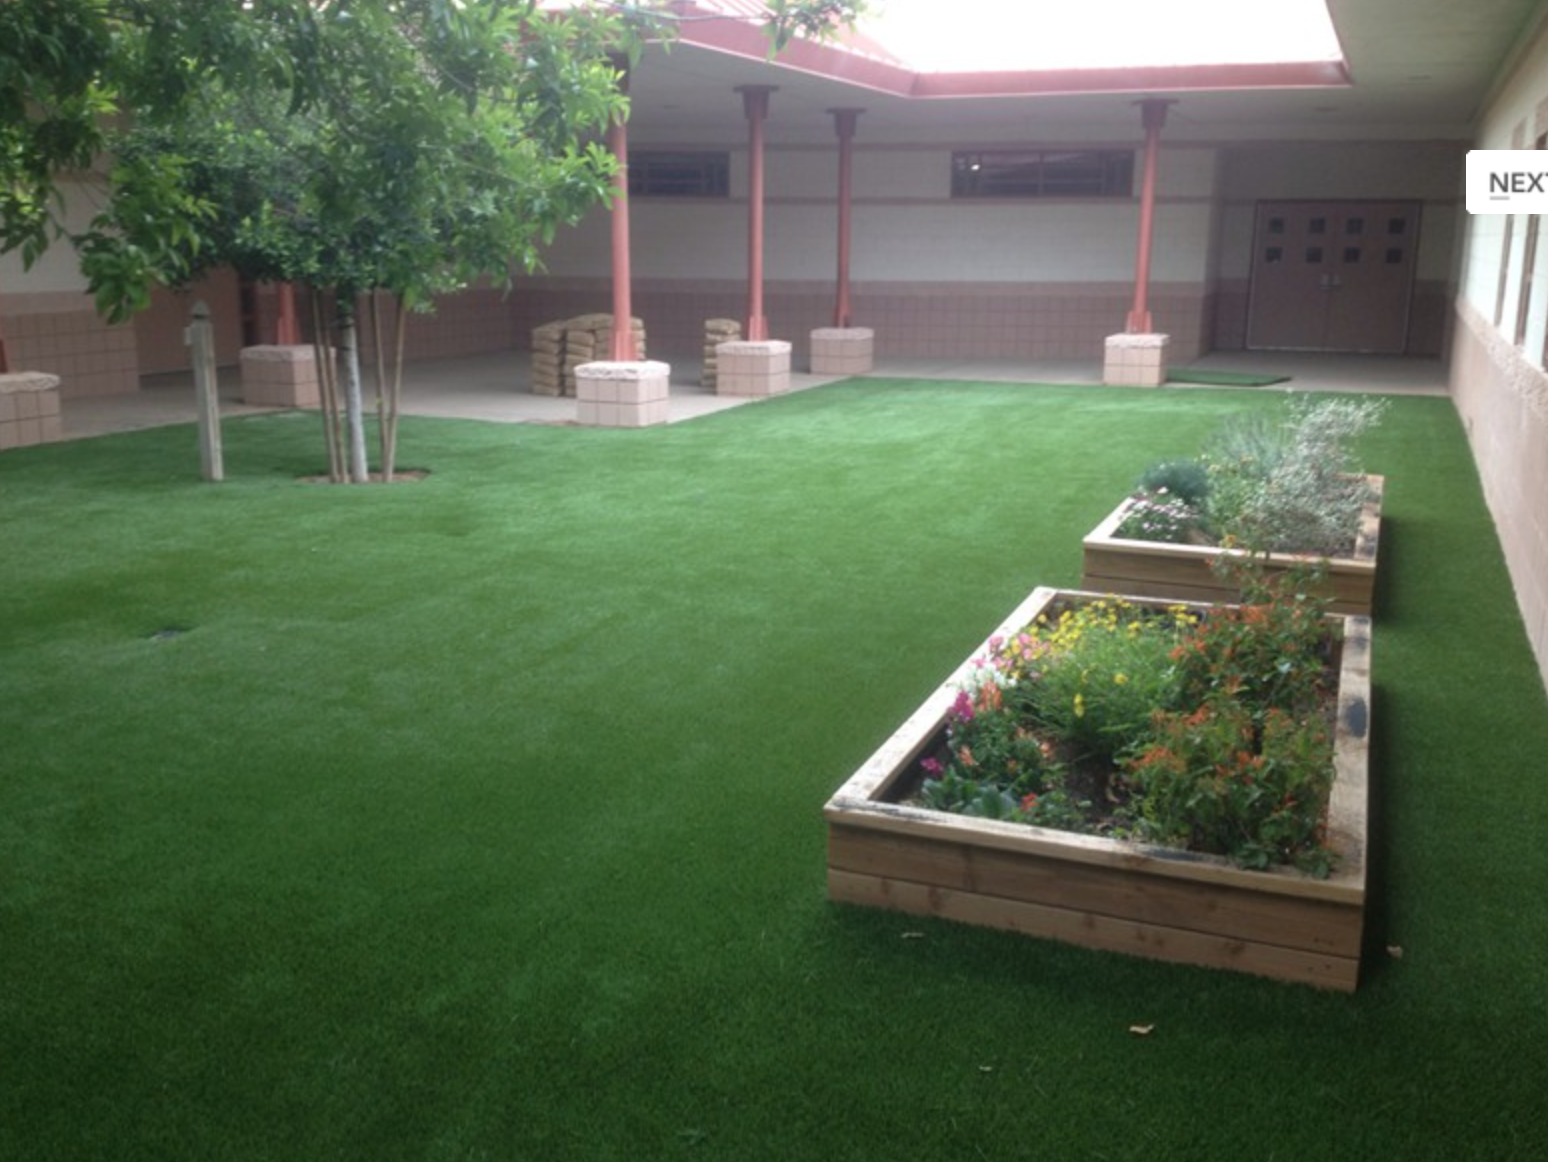  Artificial grass installation in courtyard  